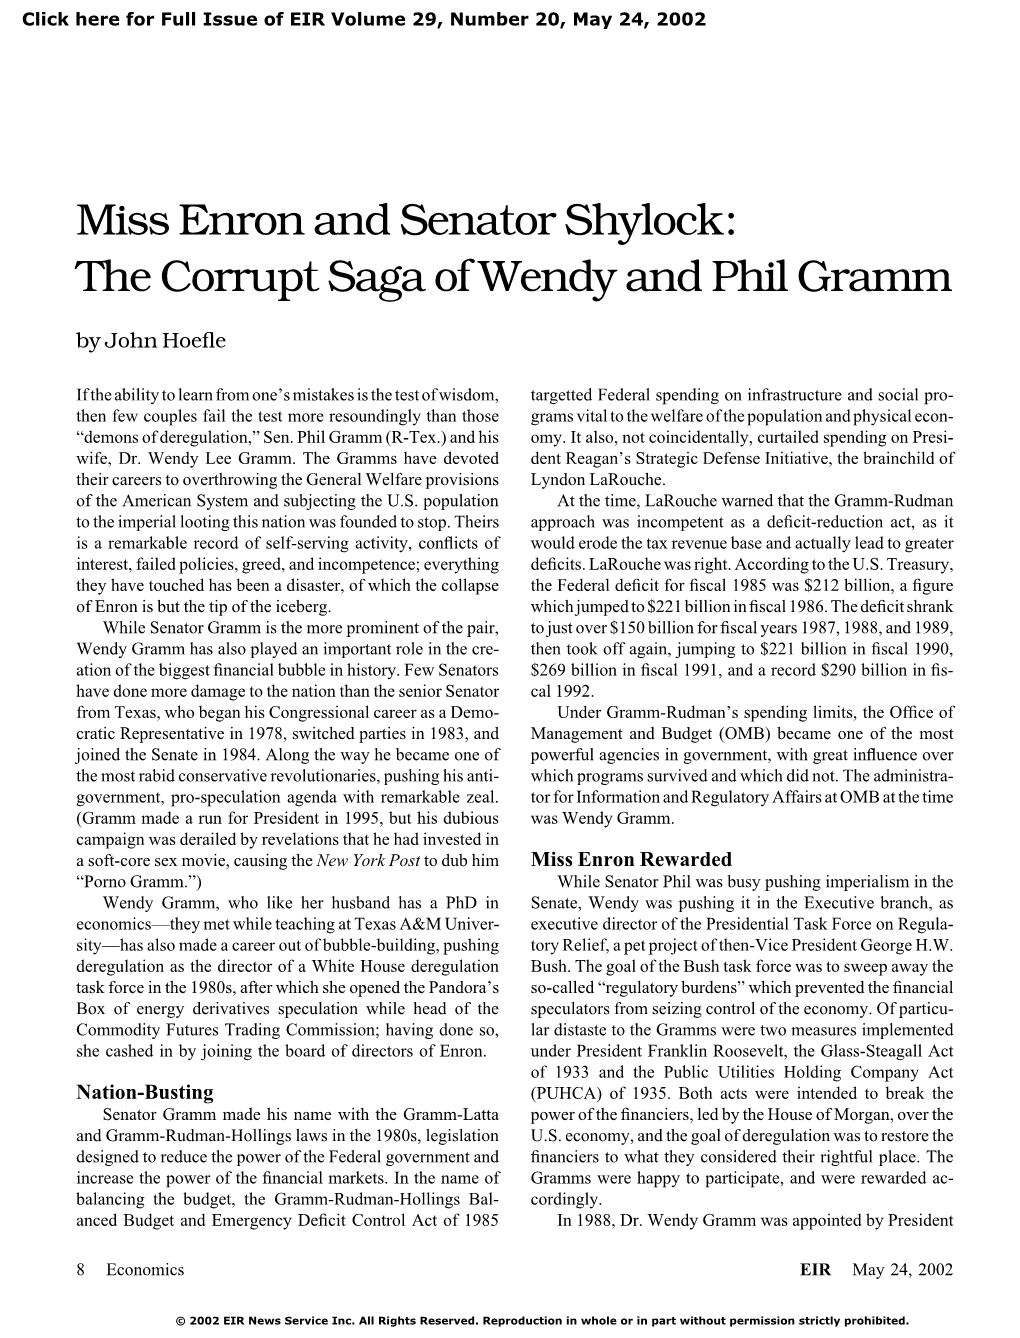 Miss Enron and Senator Shylock: the Corrupt Saga of Wendy and Phil Gramm